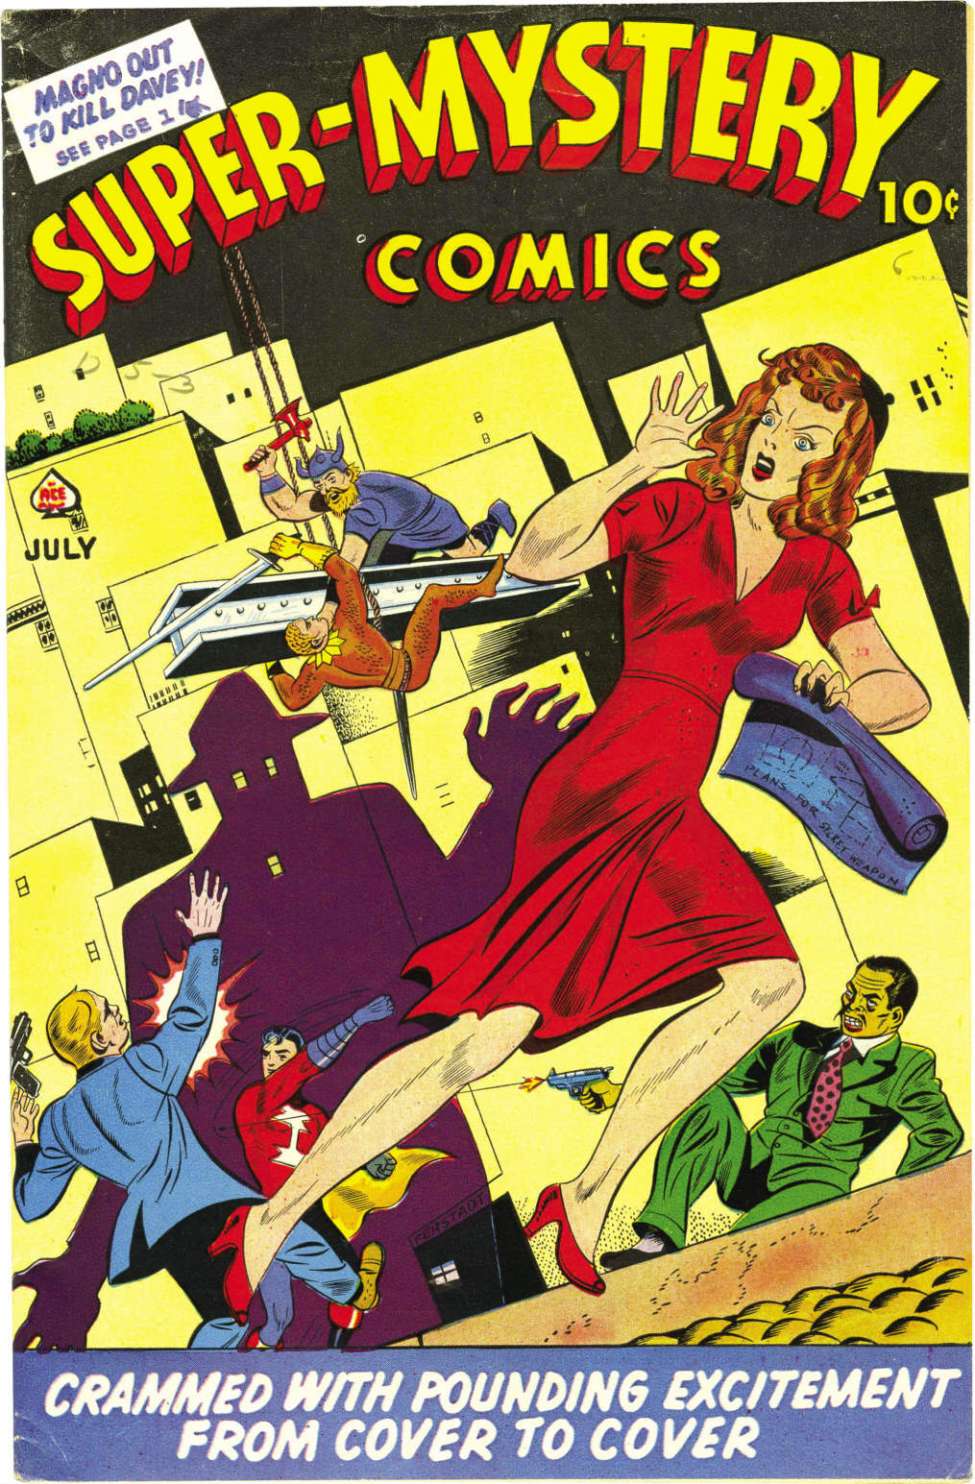 Comic Book Cover For Super-Mystery Comics v4 3 - Version 1